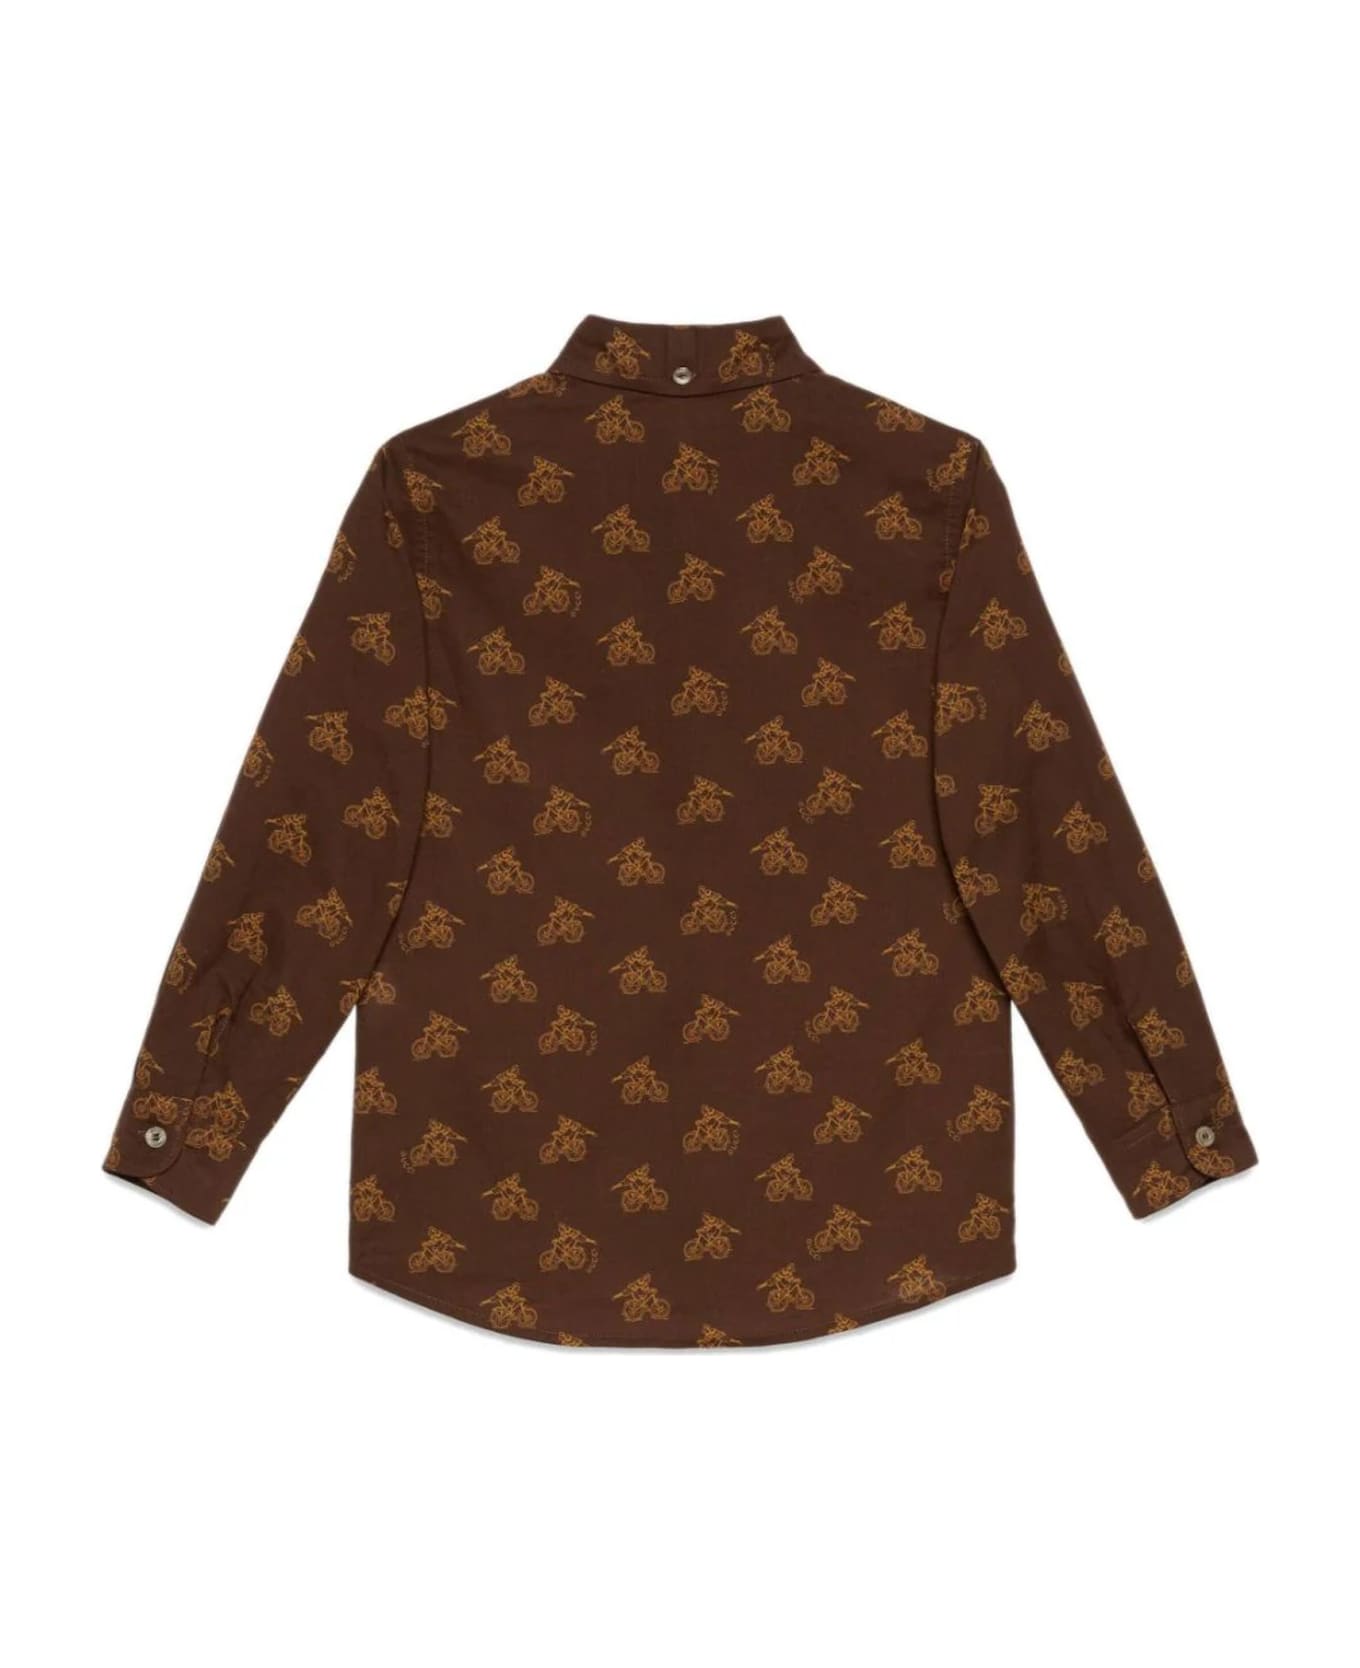 Gucci Chocolate Brown Cotton Shirt - BROWN シャツ